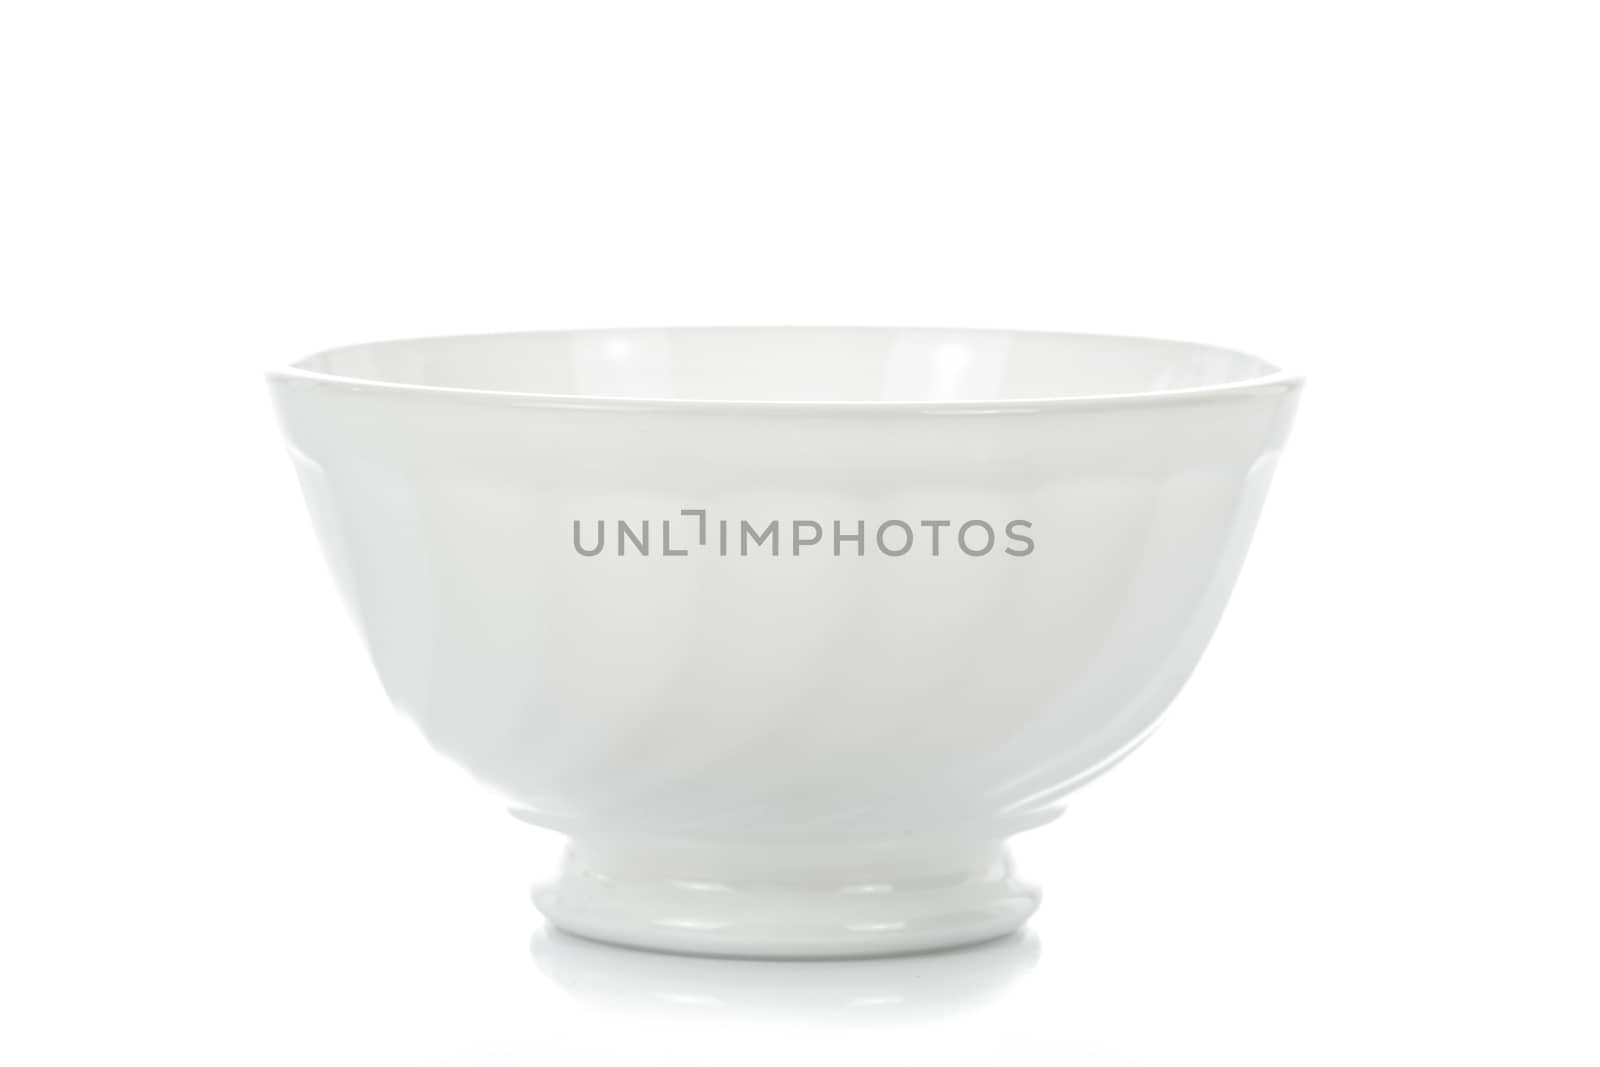 White porcelain bowl by wdnet_studio